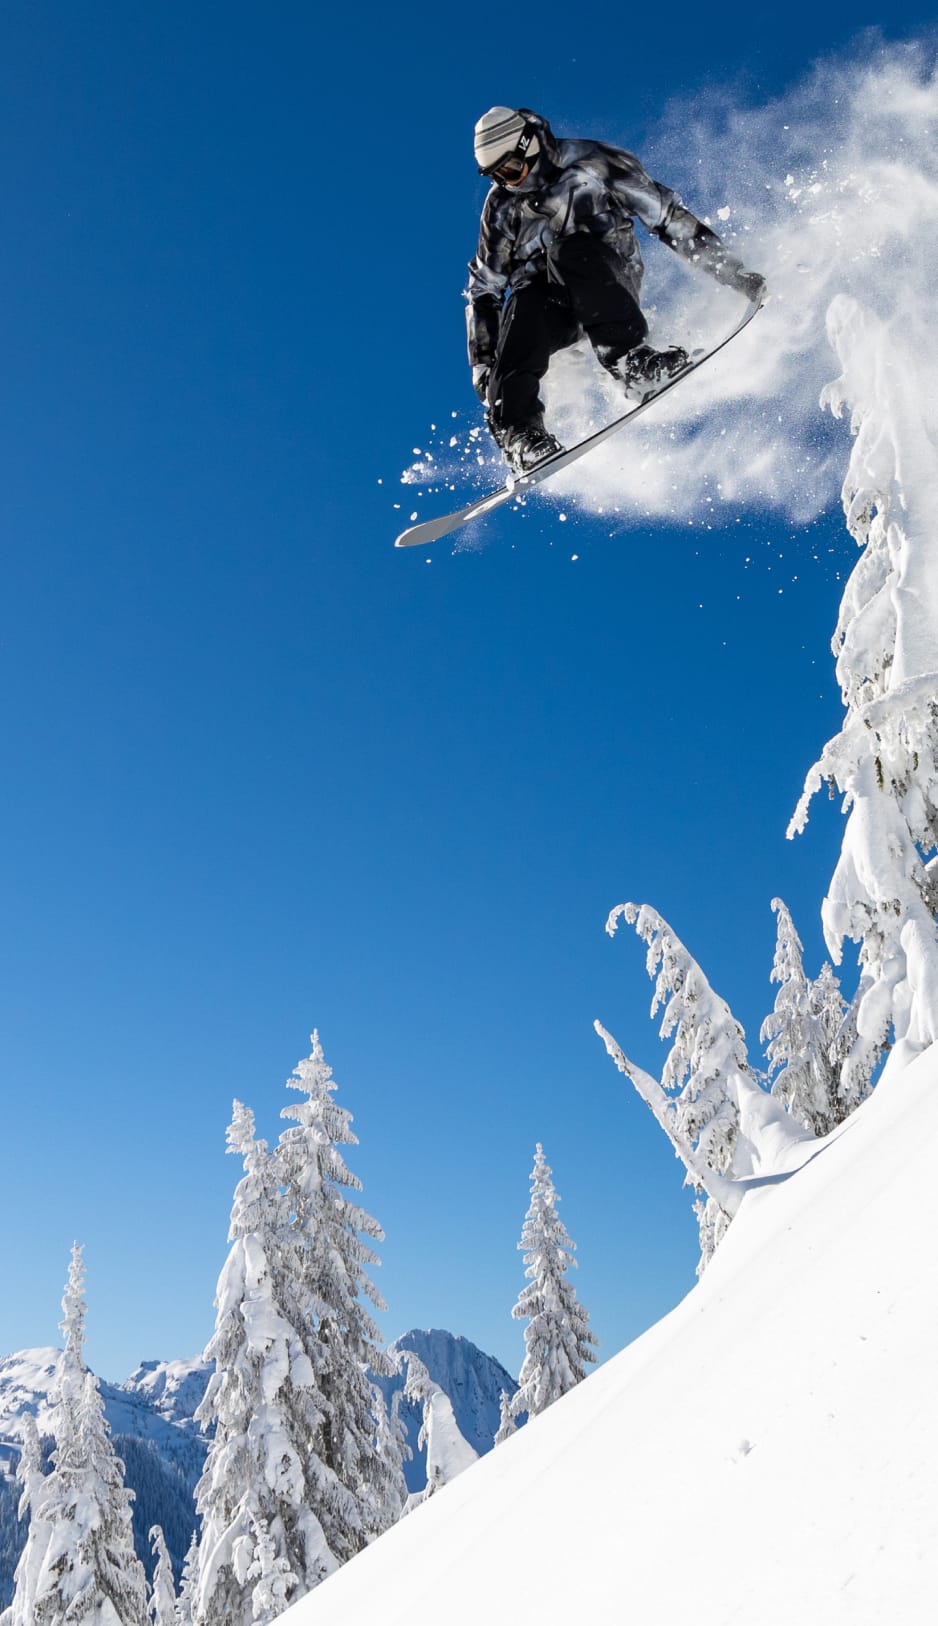 686 Technical Apparel — Outdoor, Snowboard, and Ski Gear – 686.com